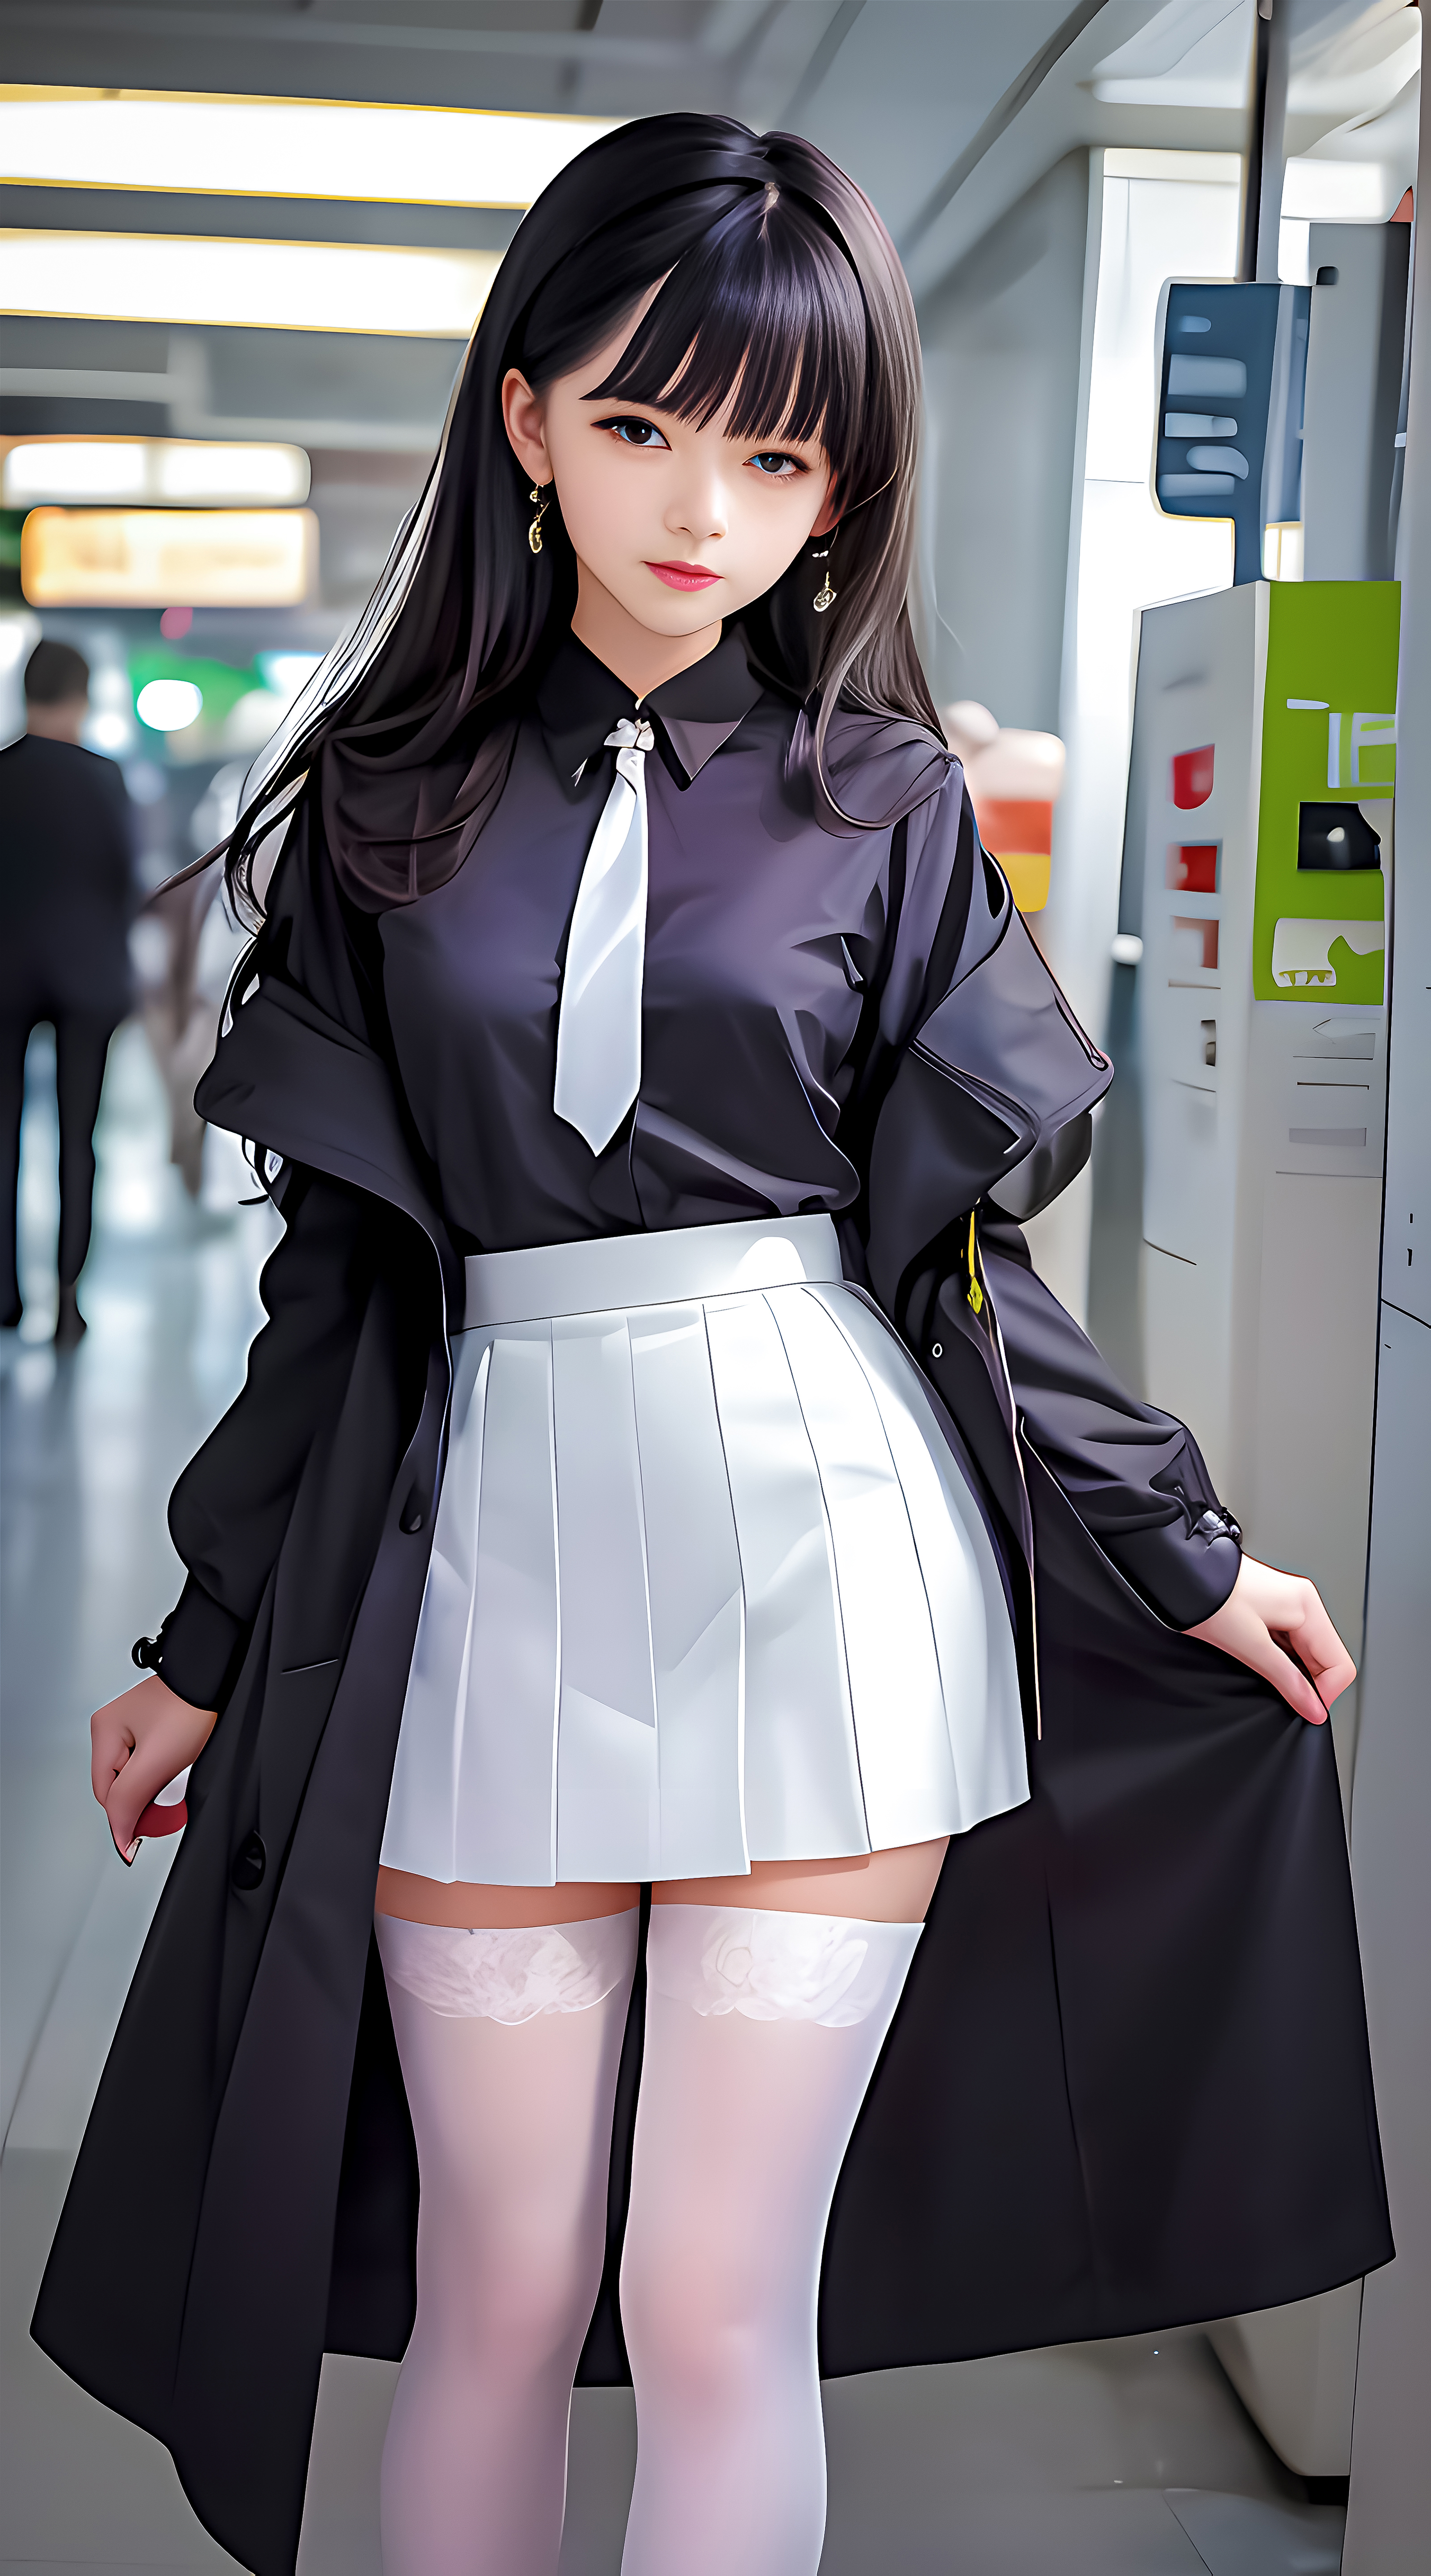 Anime 3040x5472 AI art Asian women skirt stockings tie looking at viewer long hair portrait display school uniform schoolgirl